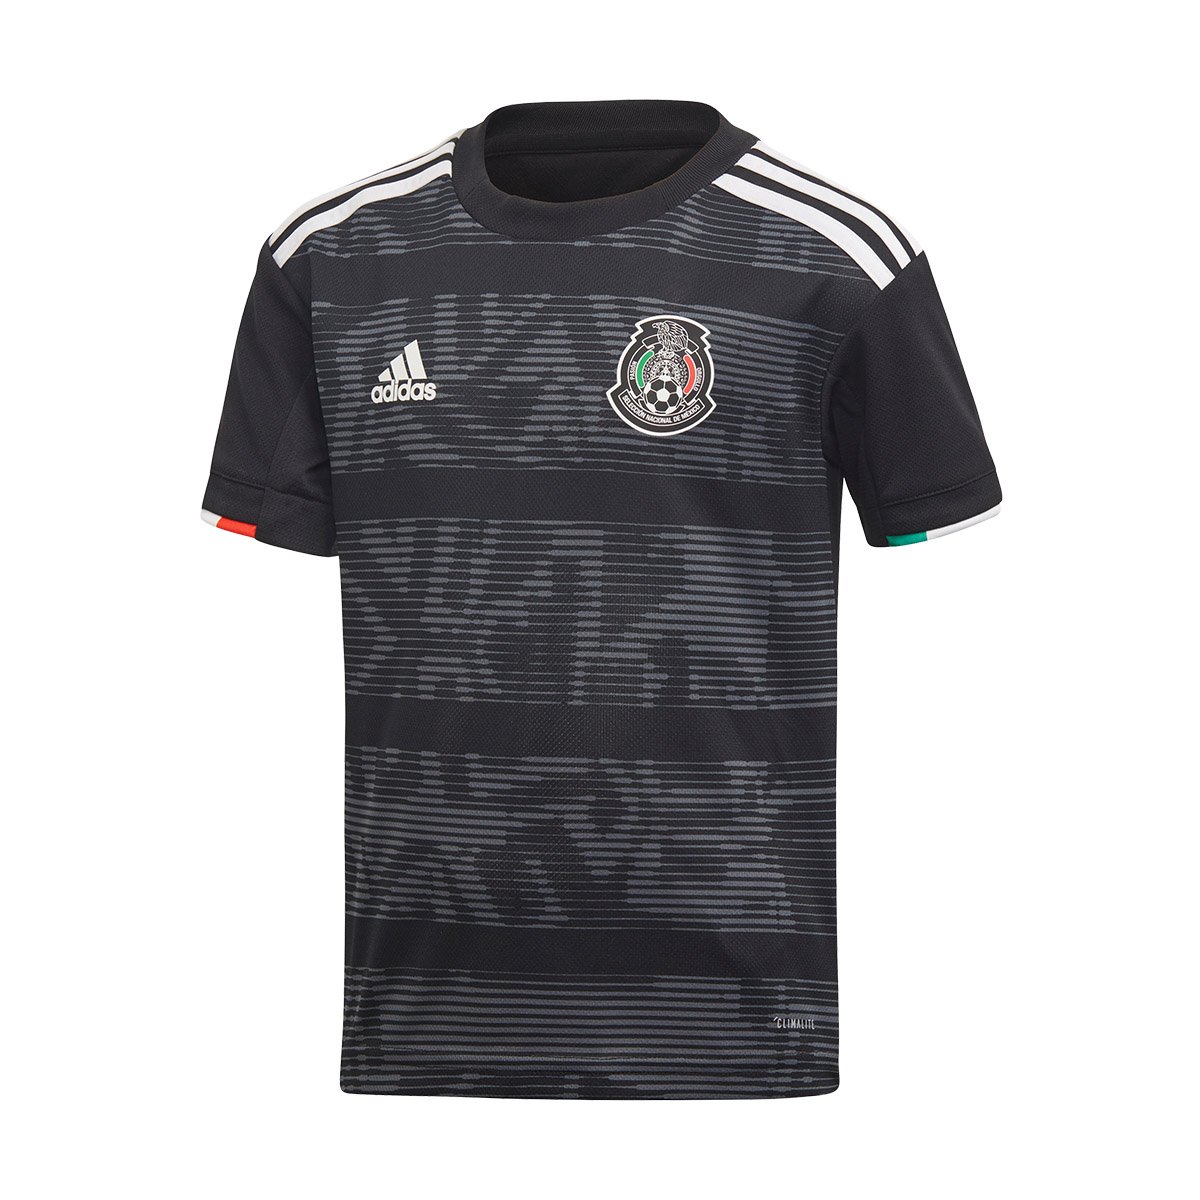 Minikit México Soccer Adidas